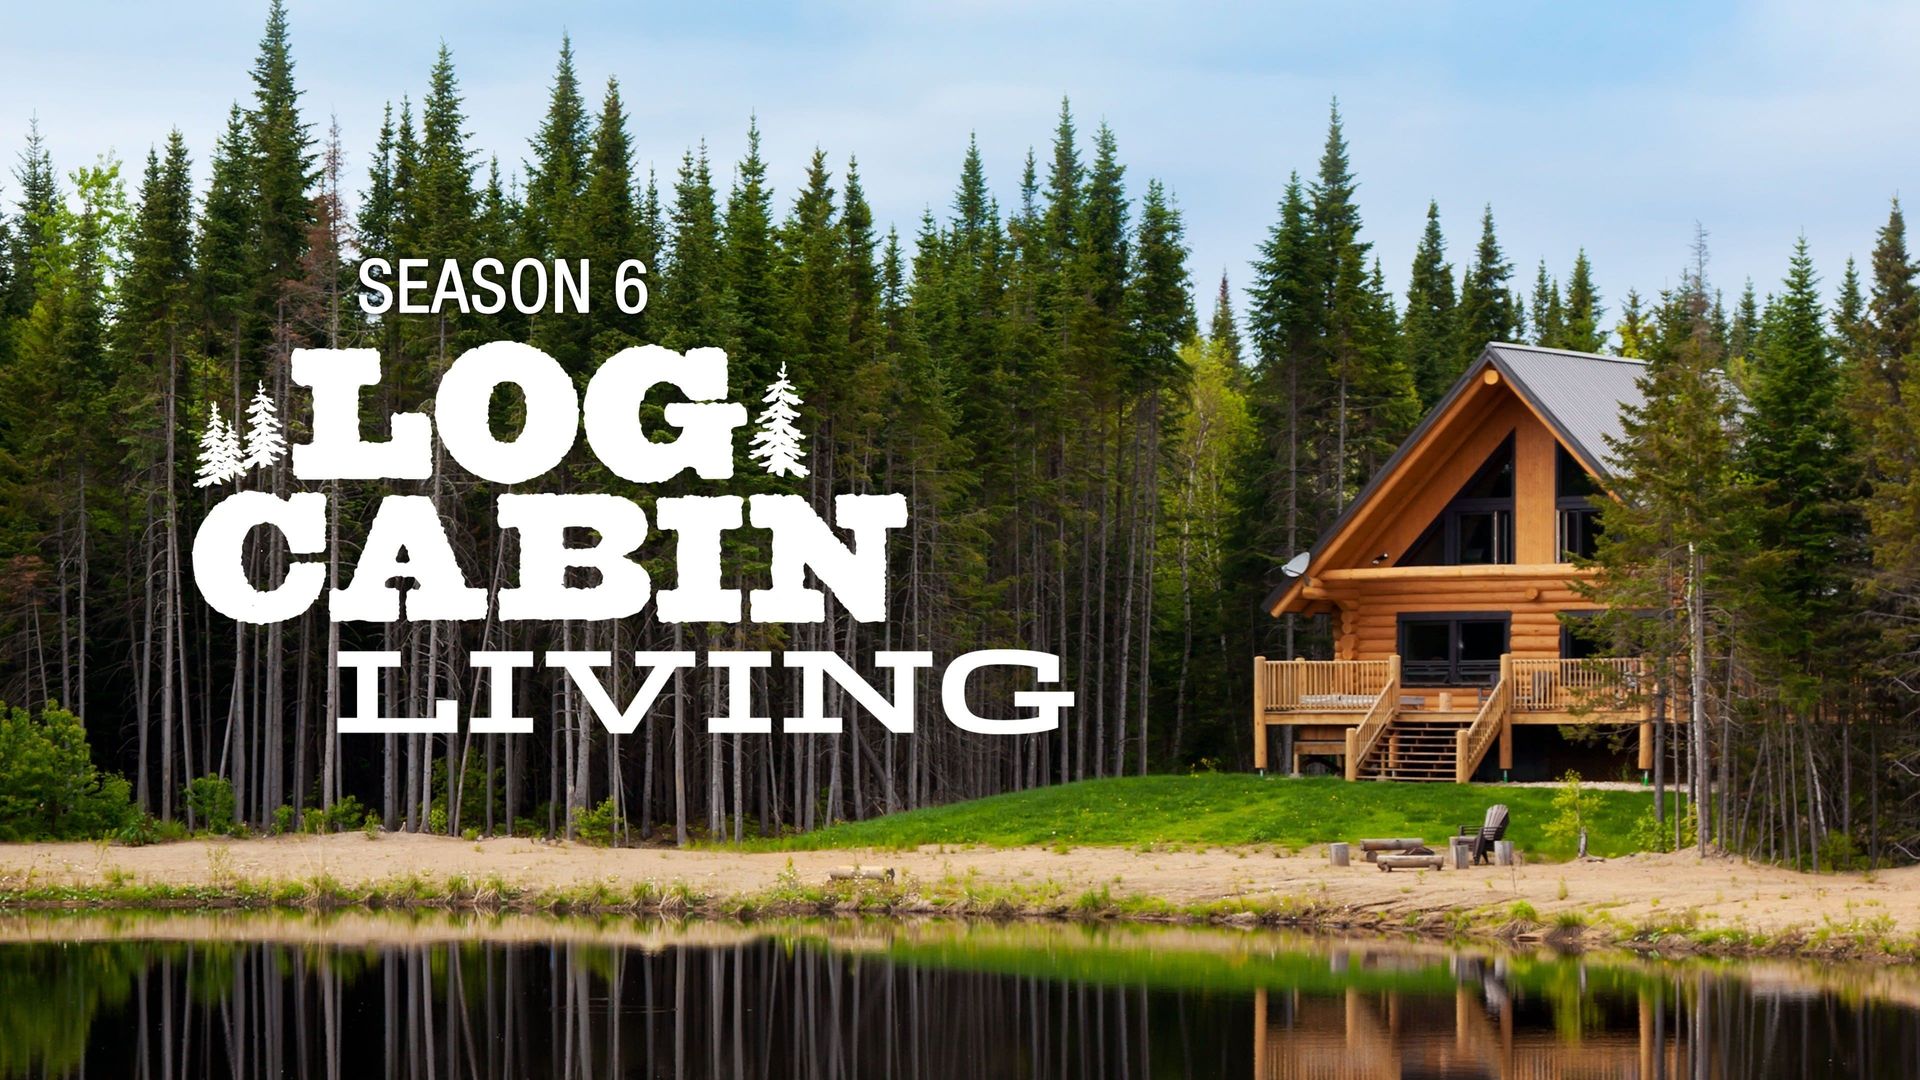 Season 07, Episode 13 Seeking a Georgia Log Cabin